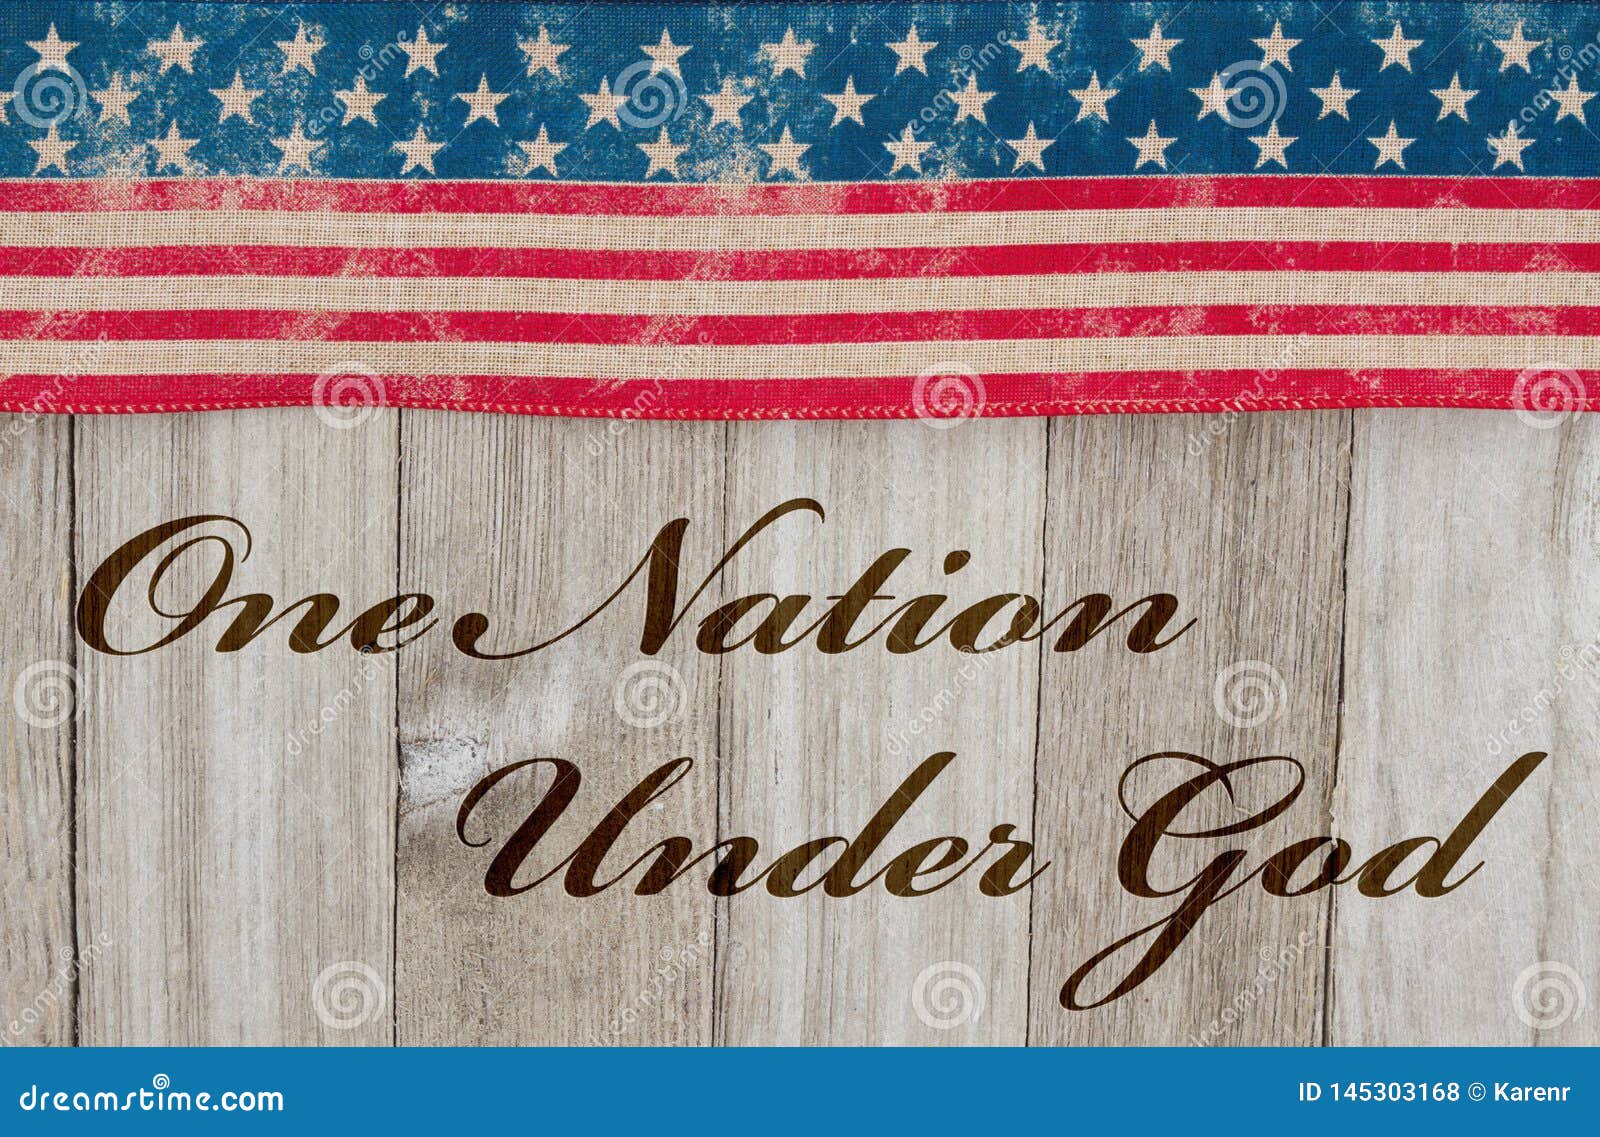 america patriotic message one nation under god